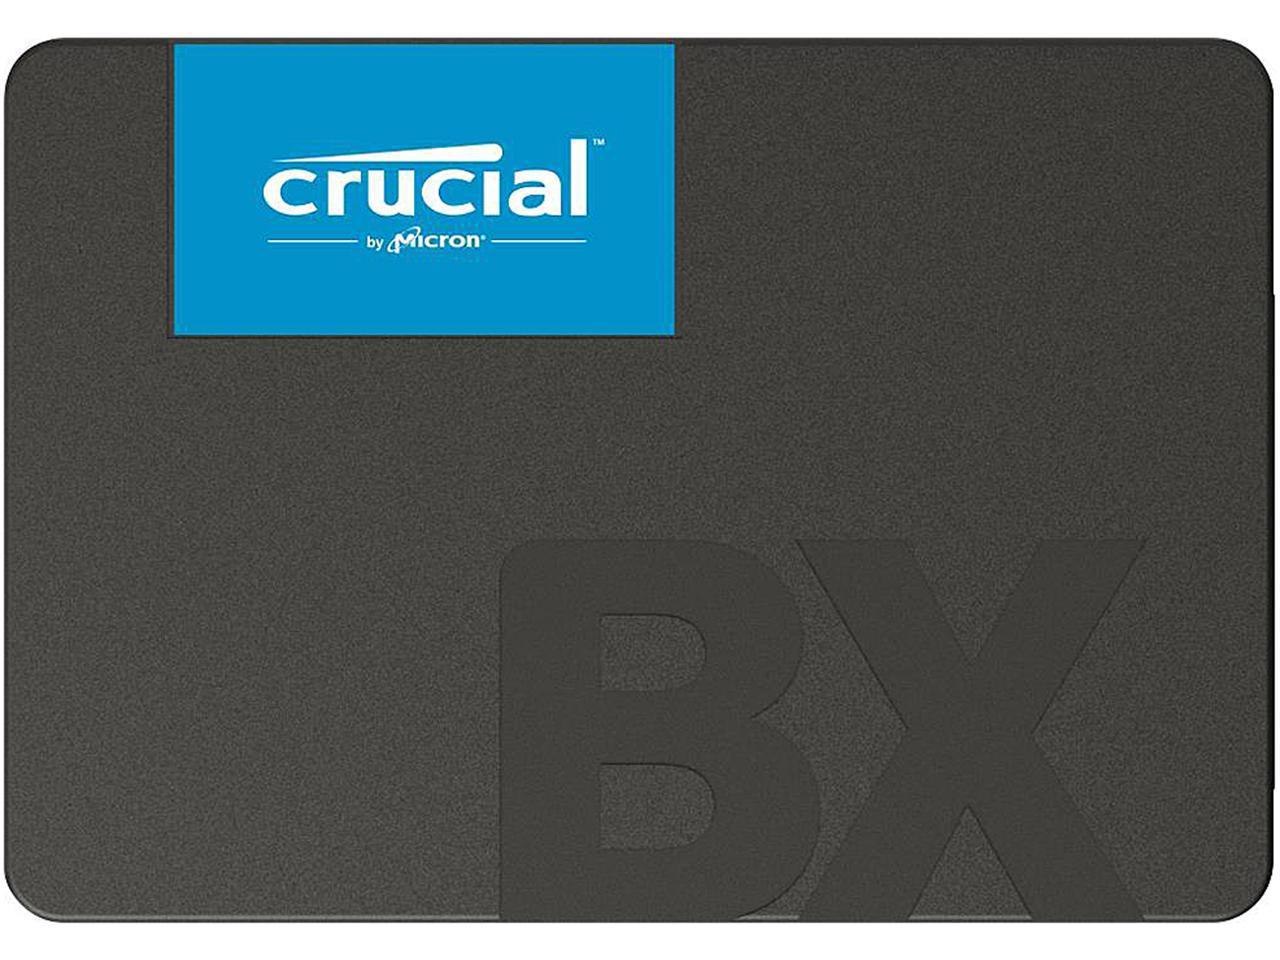 Crucial BX500 480GB 3D Nand Sata 2.5-Inch Internal SSD